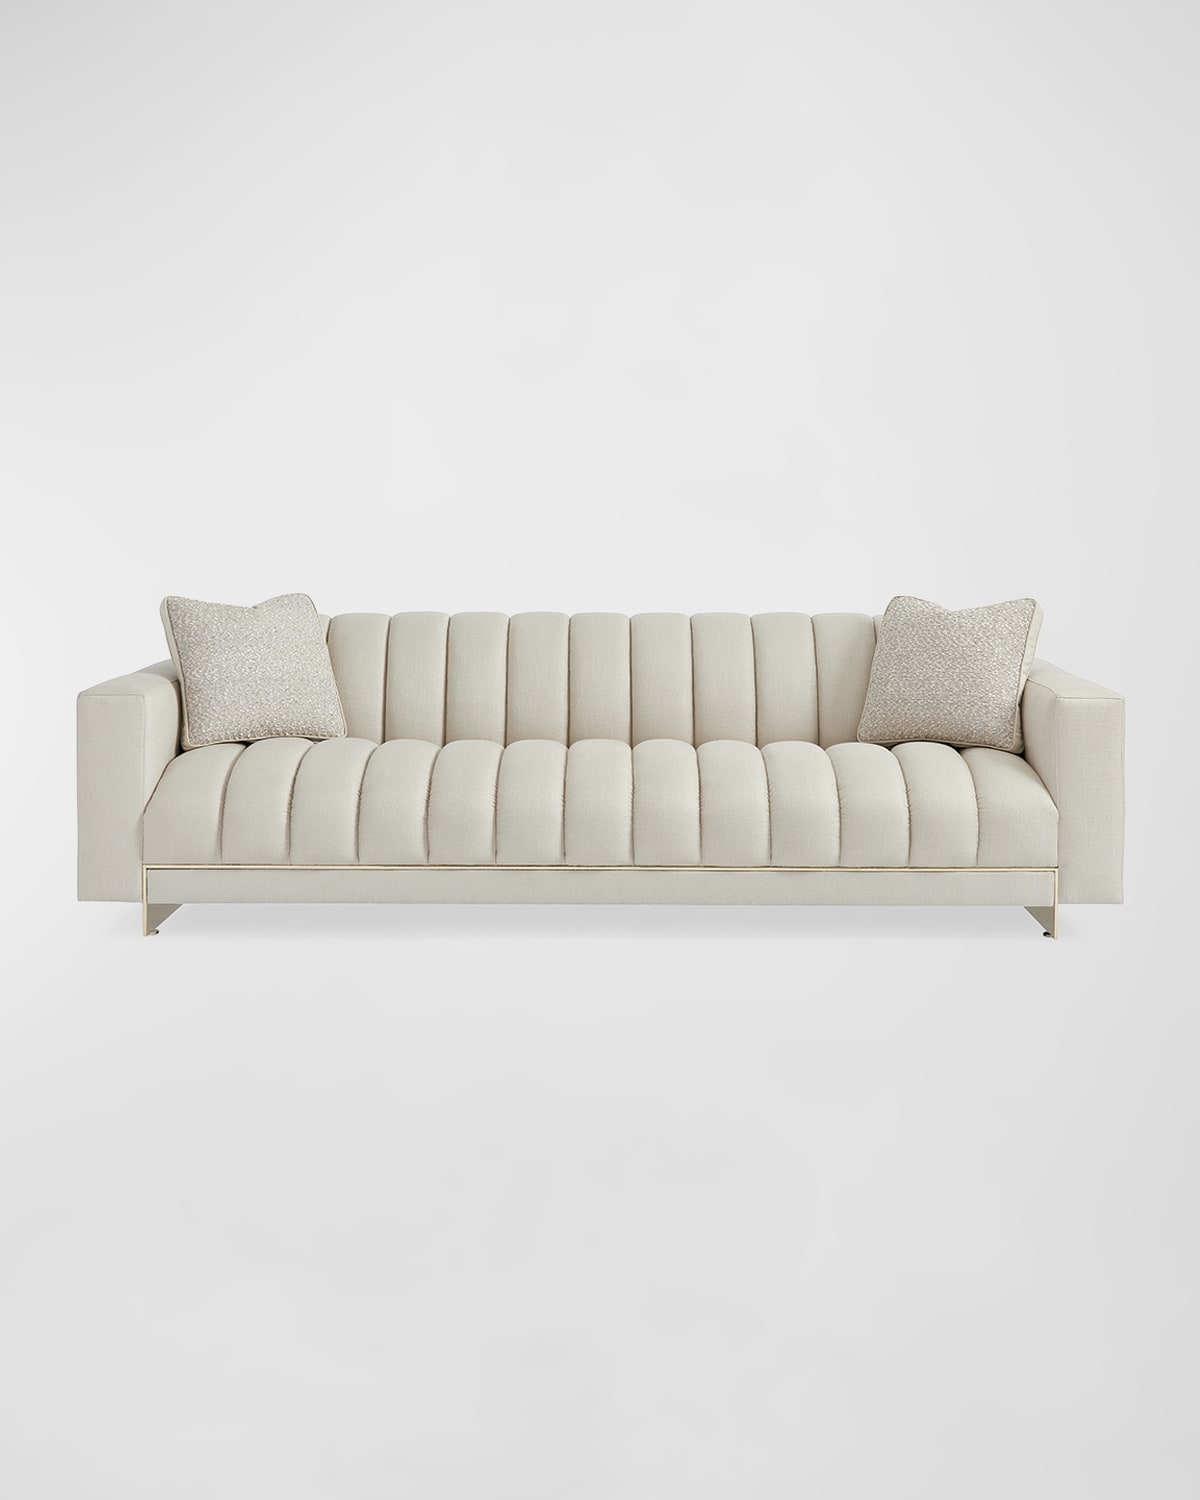 The Wall Balanced Sofa, 105"